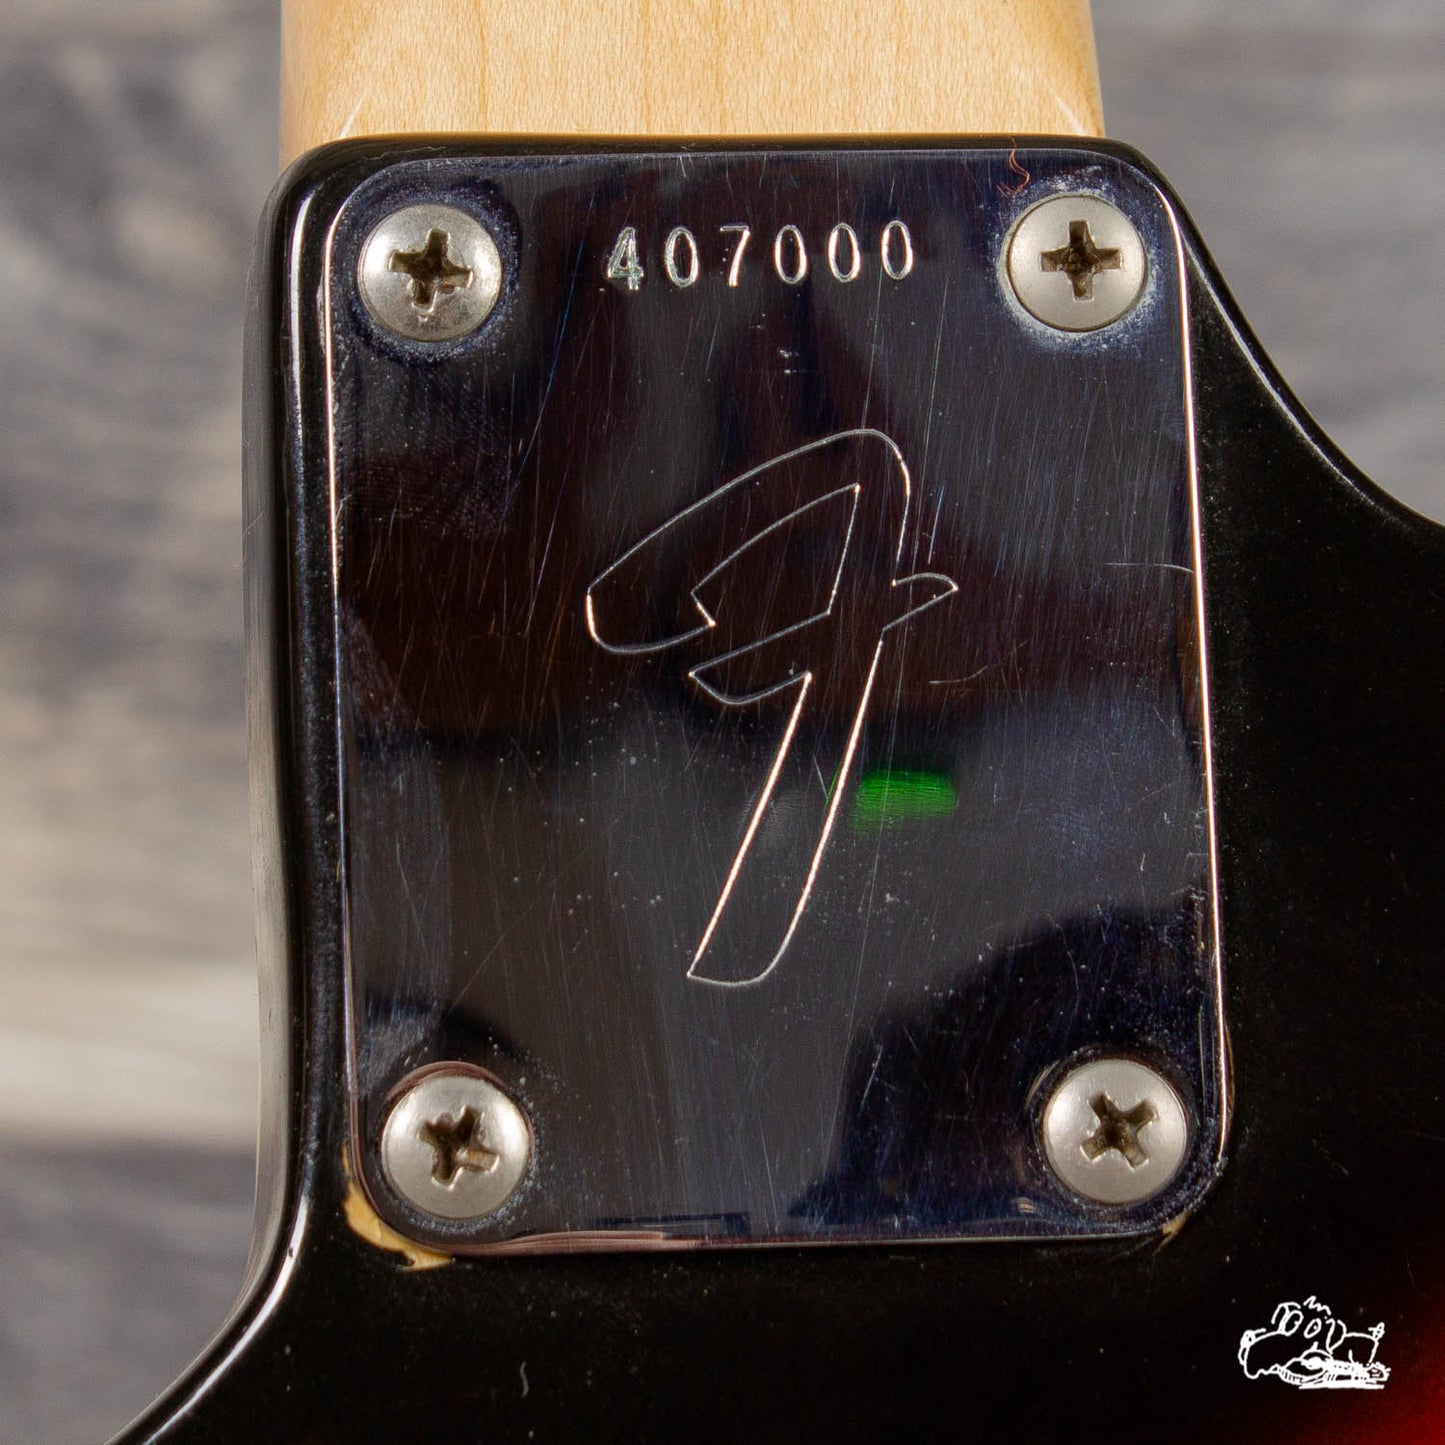 1973 Fender Bass VI